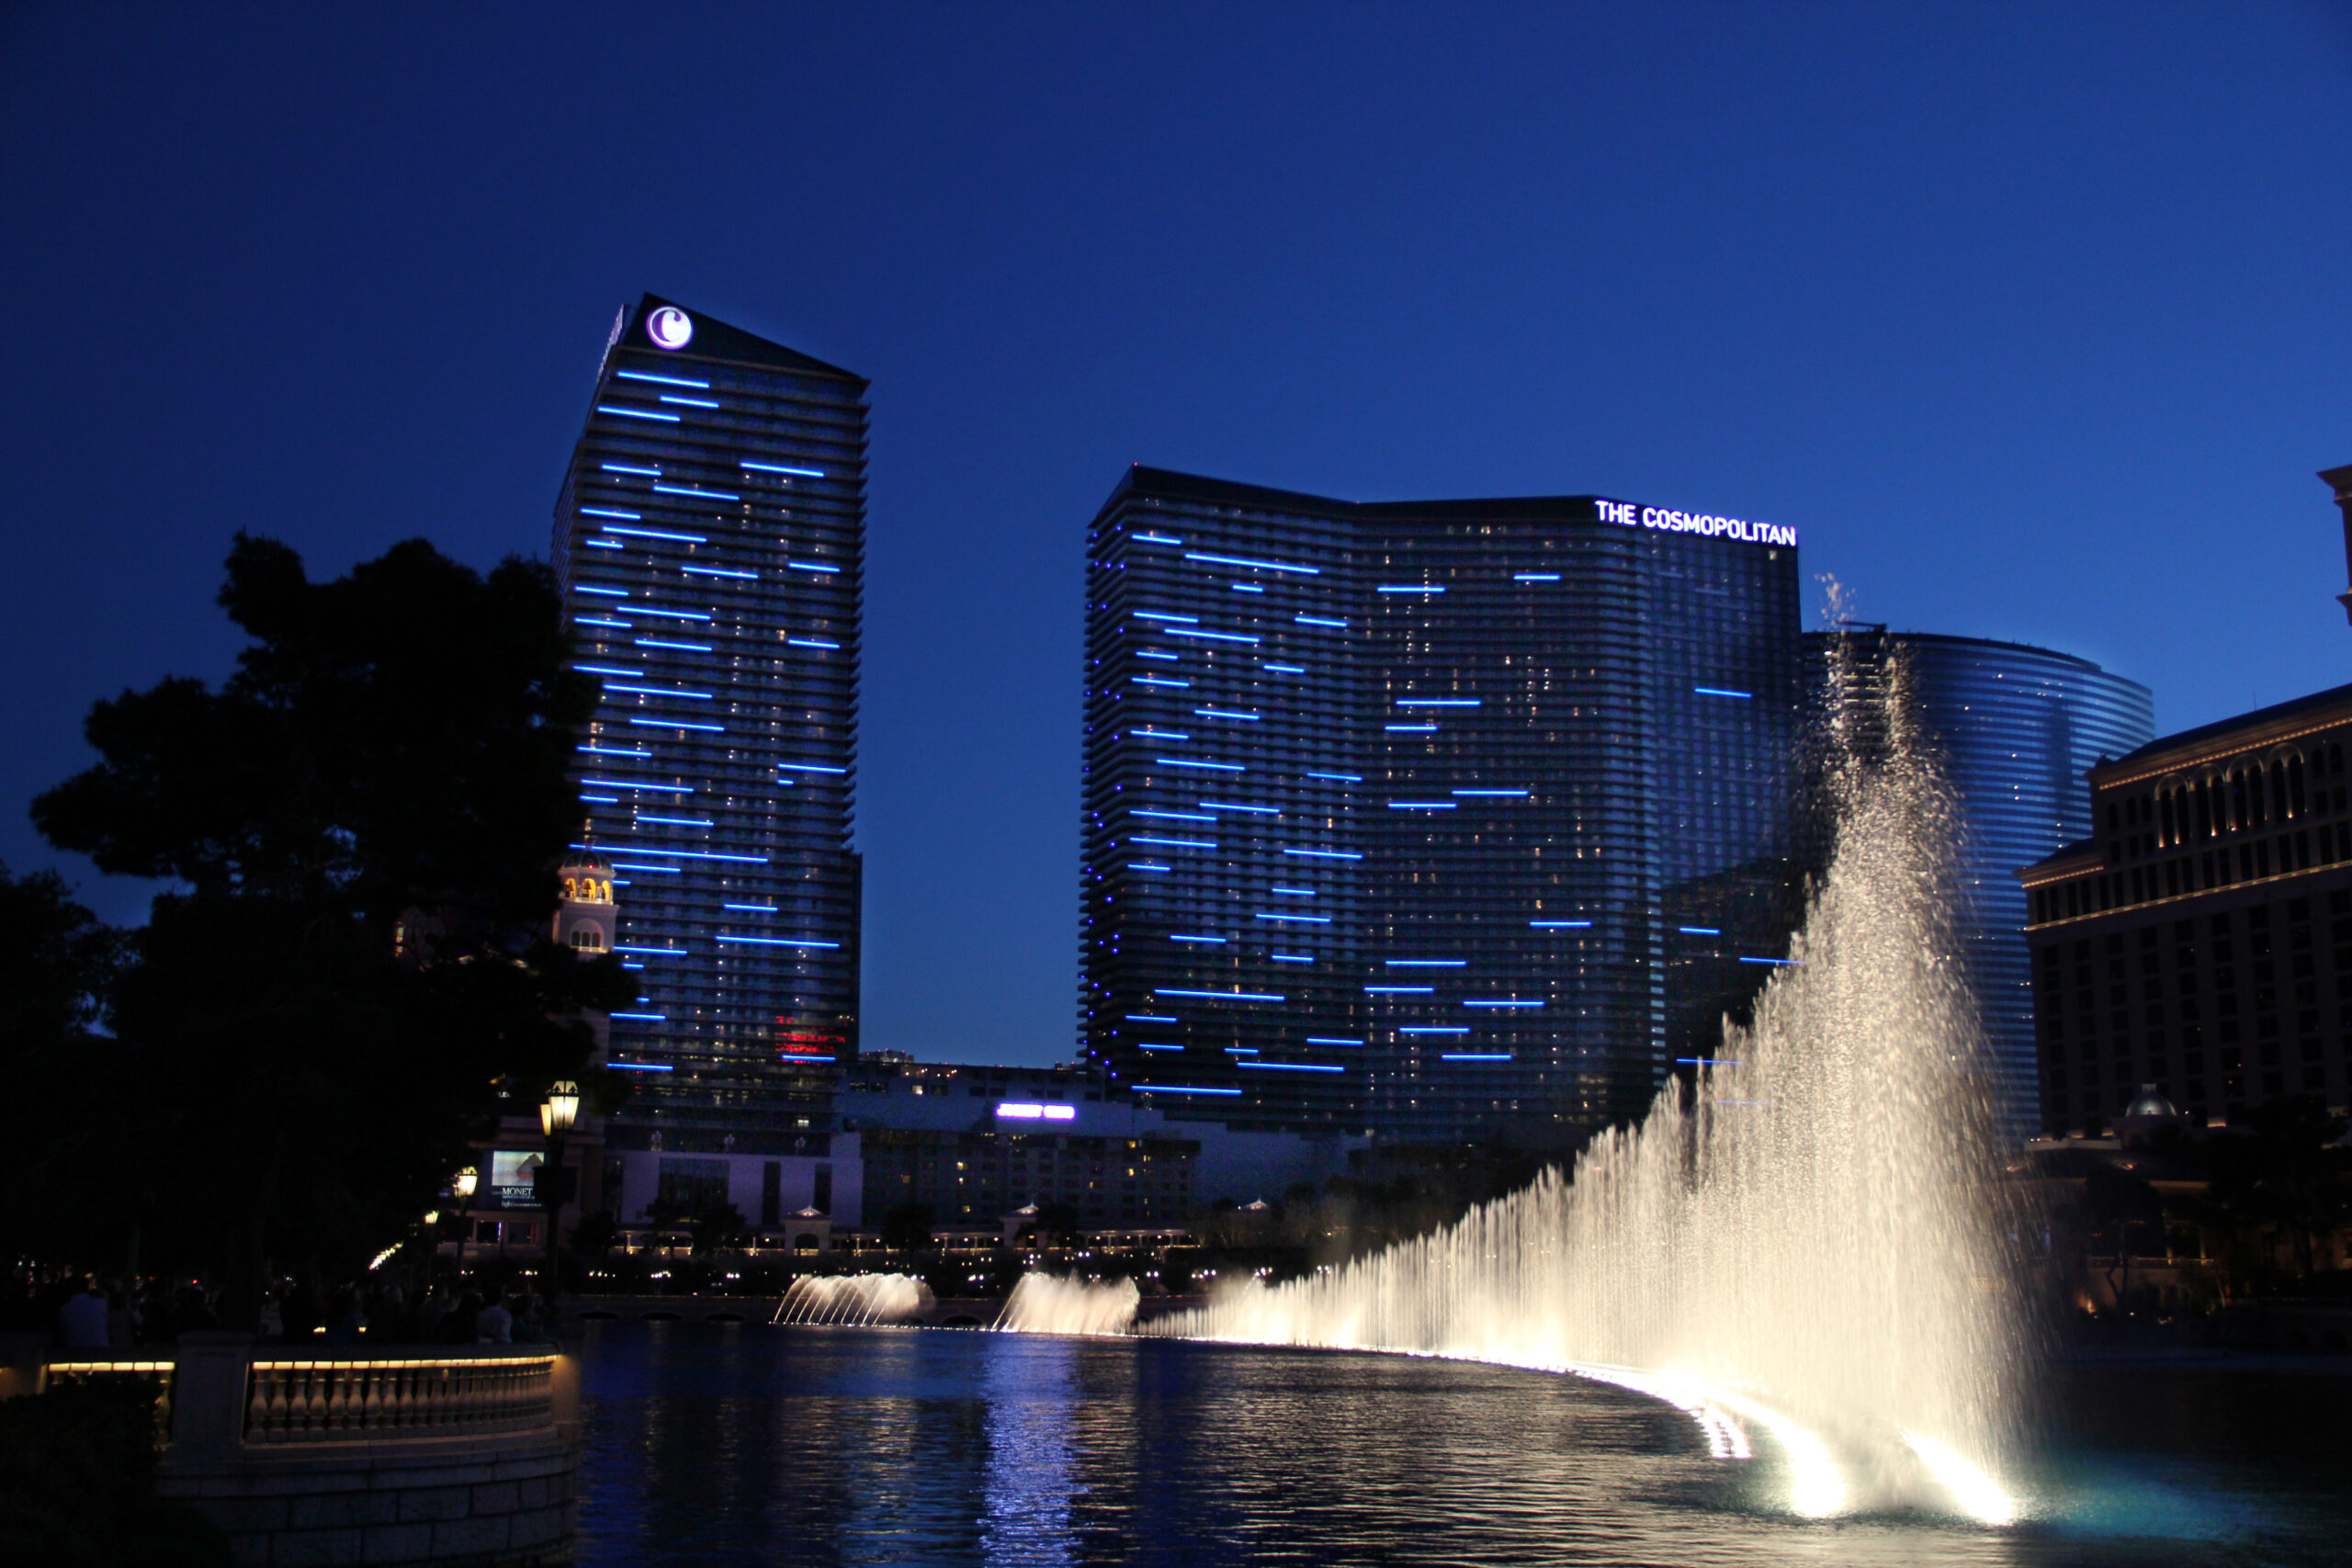 The Cosmopolitan Hotel in Las Vegas